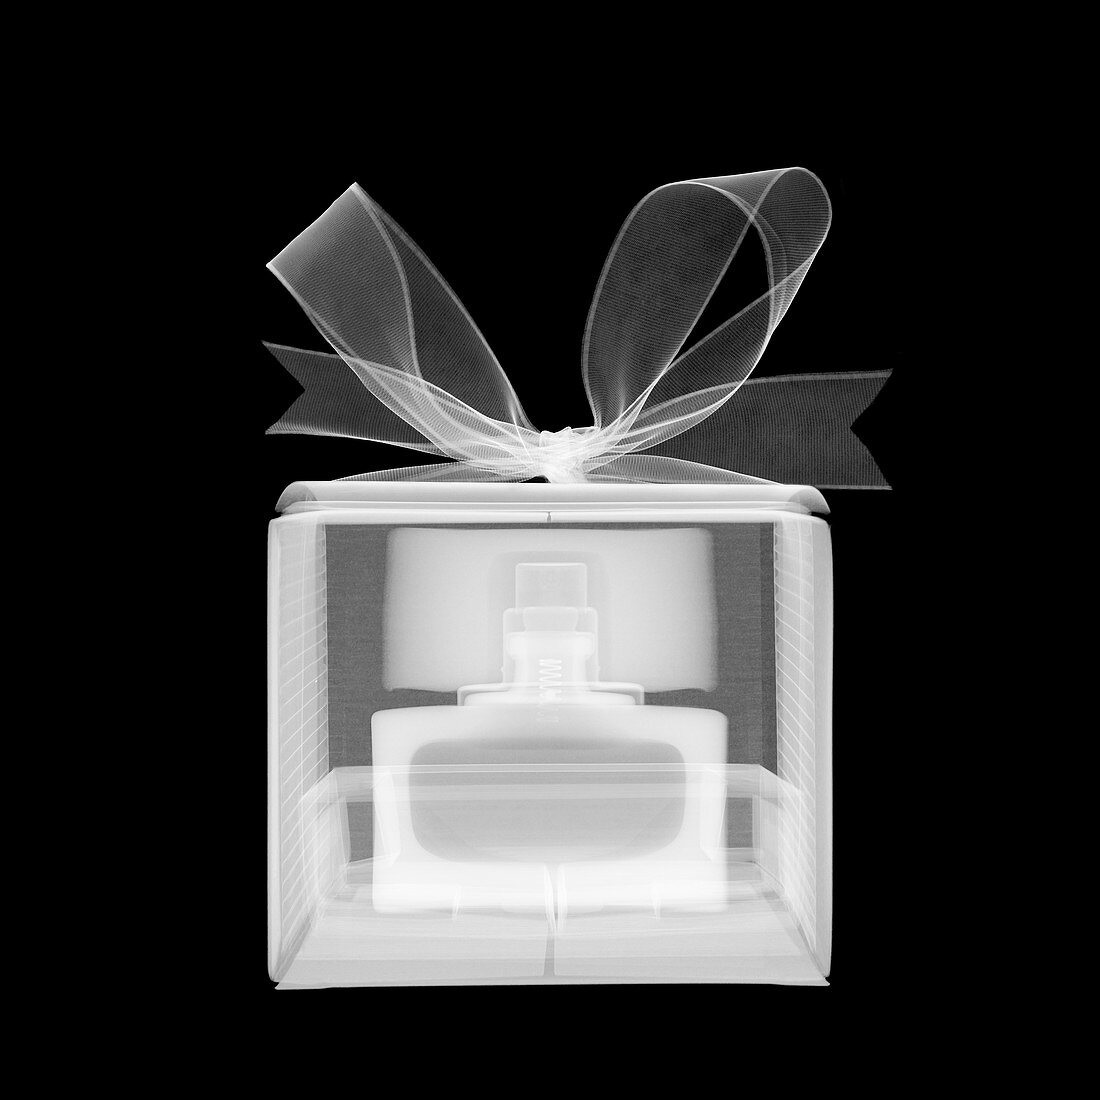 Boxed perfume, X-ray